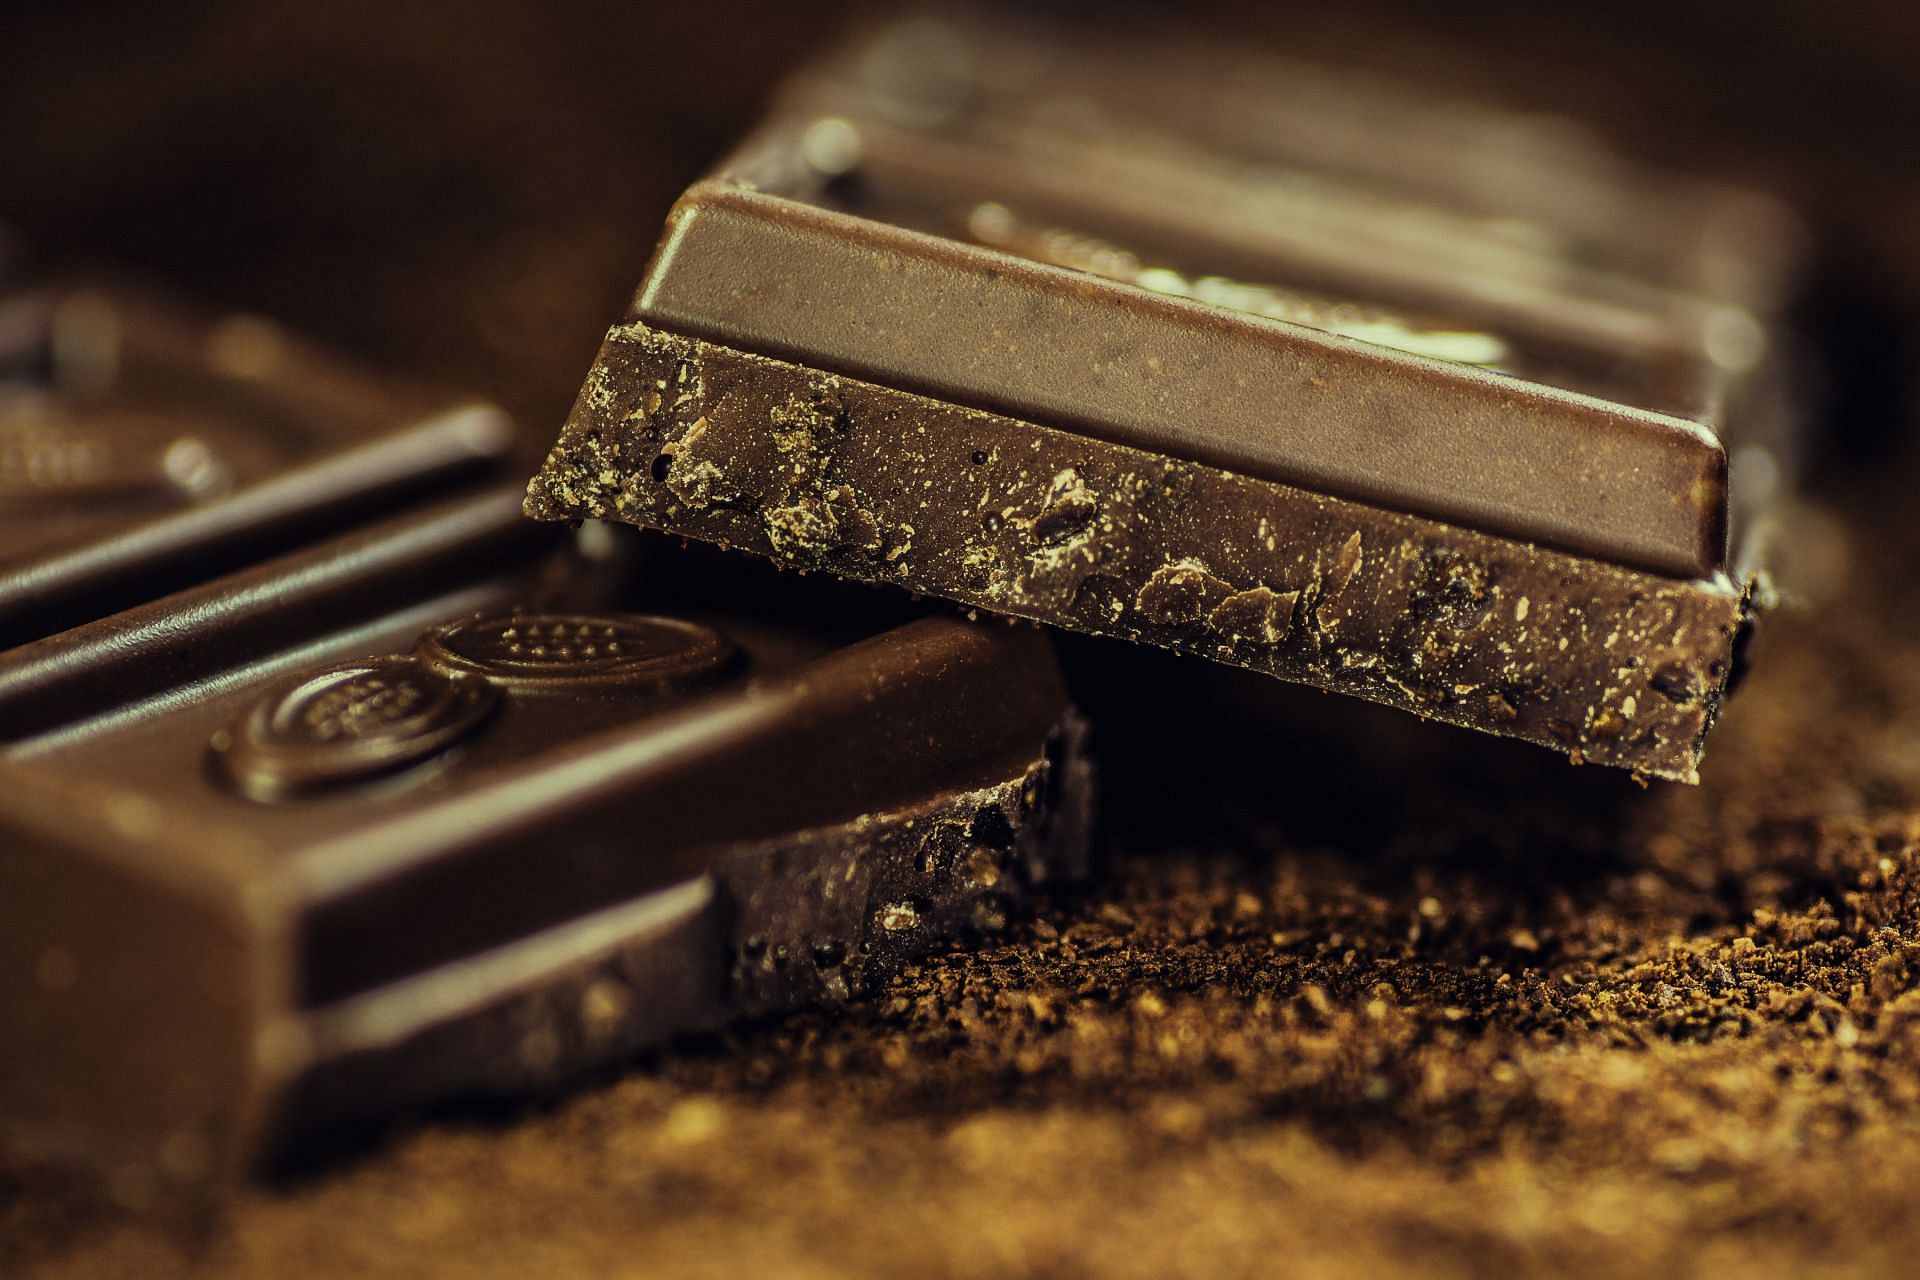 Is dark chocolate safe to eat? (image via pexels / pixabay)